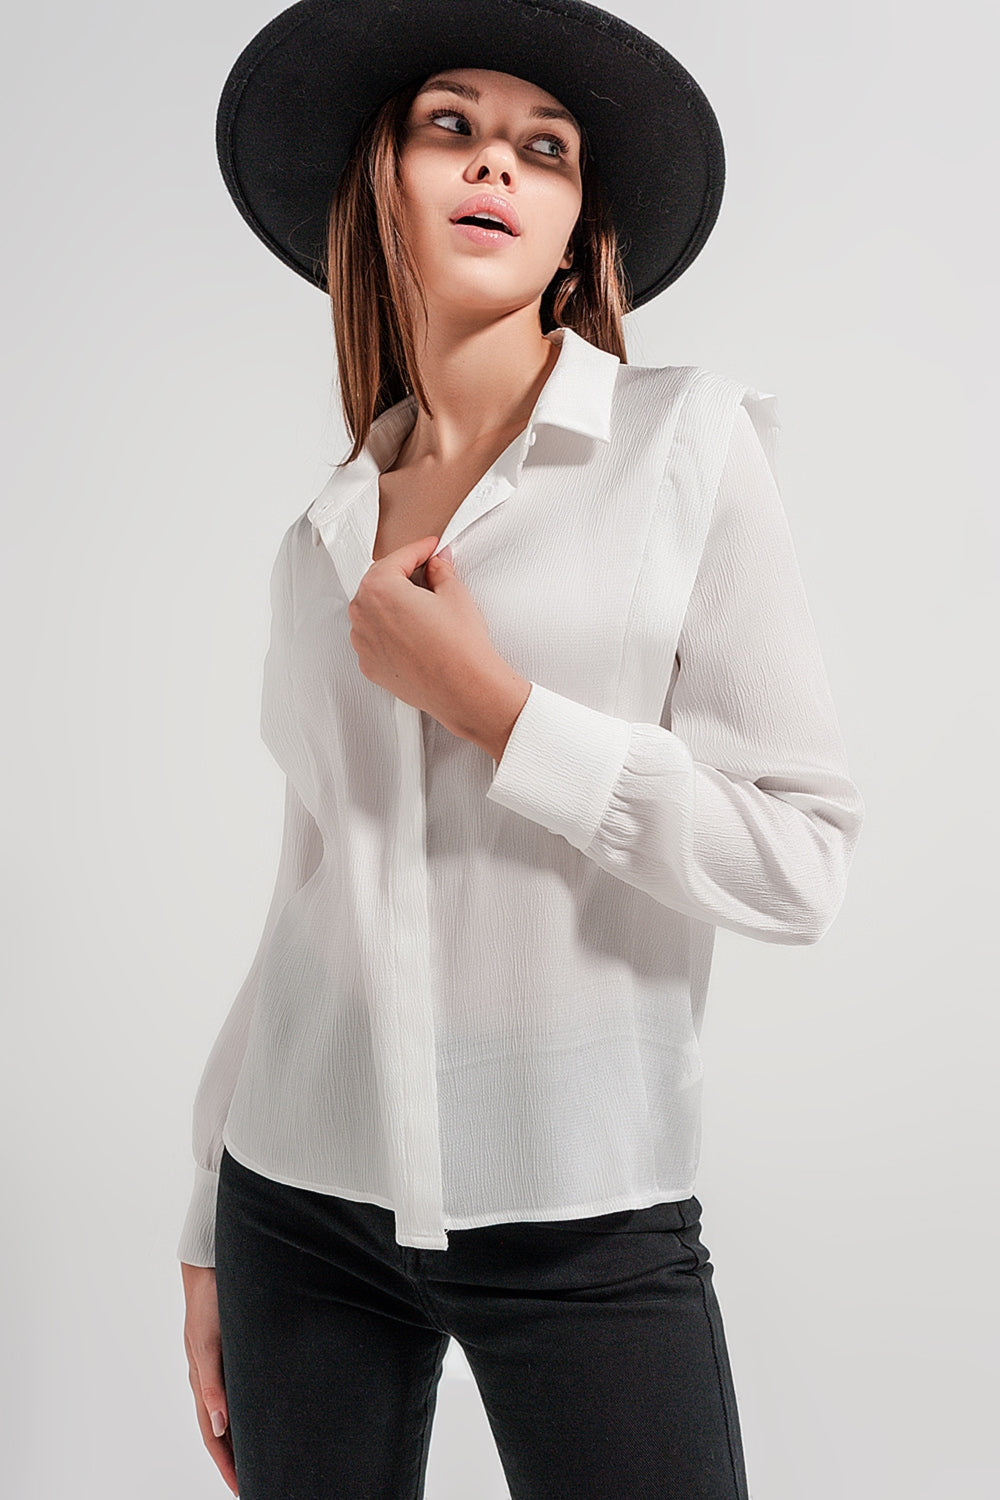 Ecru blouse with ruffle details Szua Store